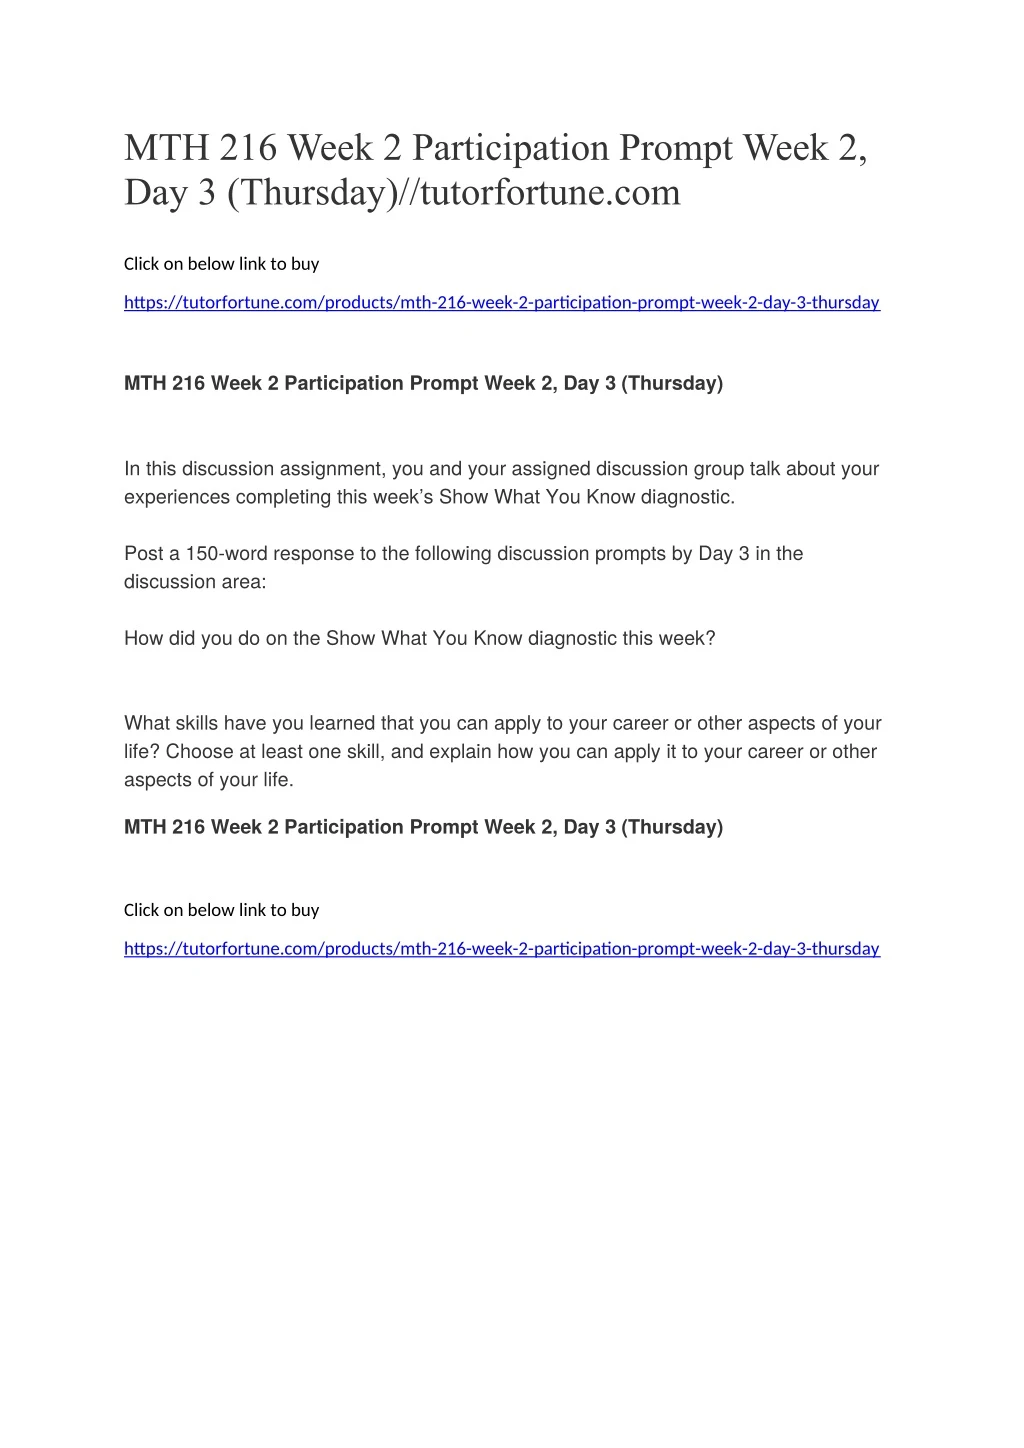 mth 216 week 2 participation prompt week